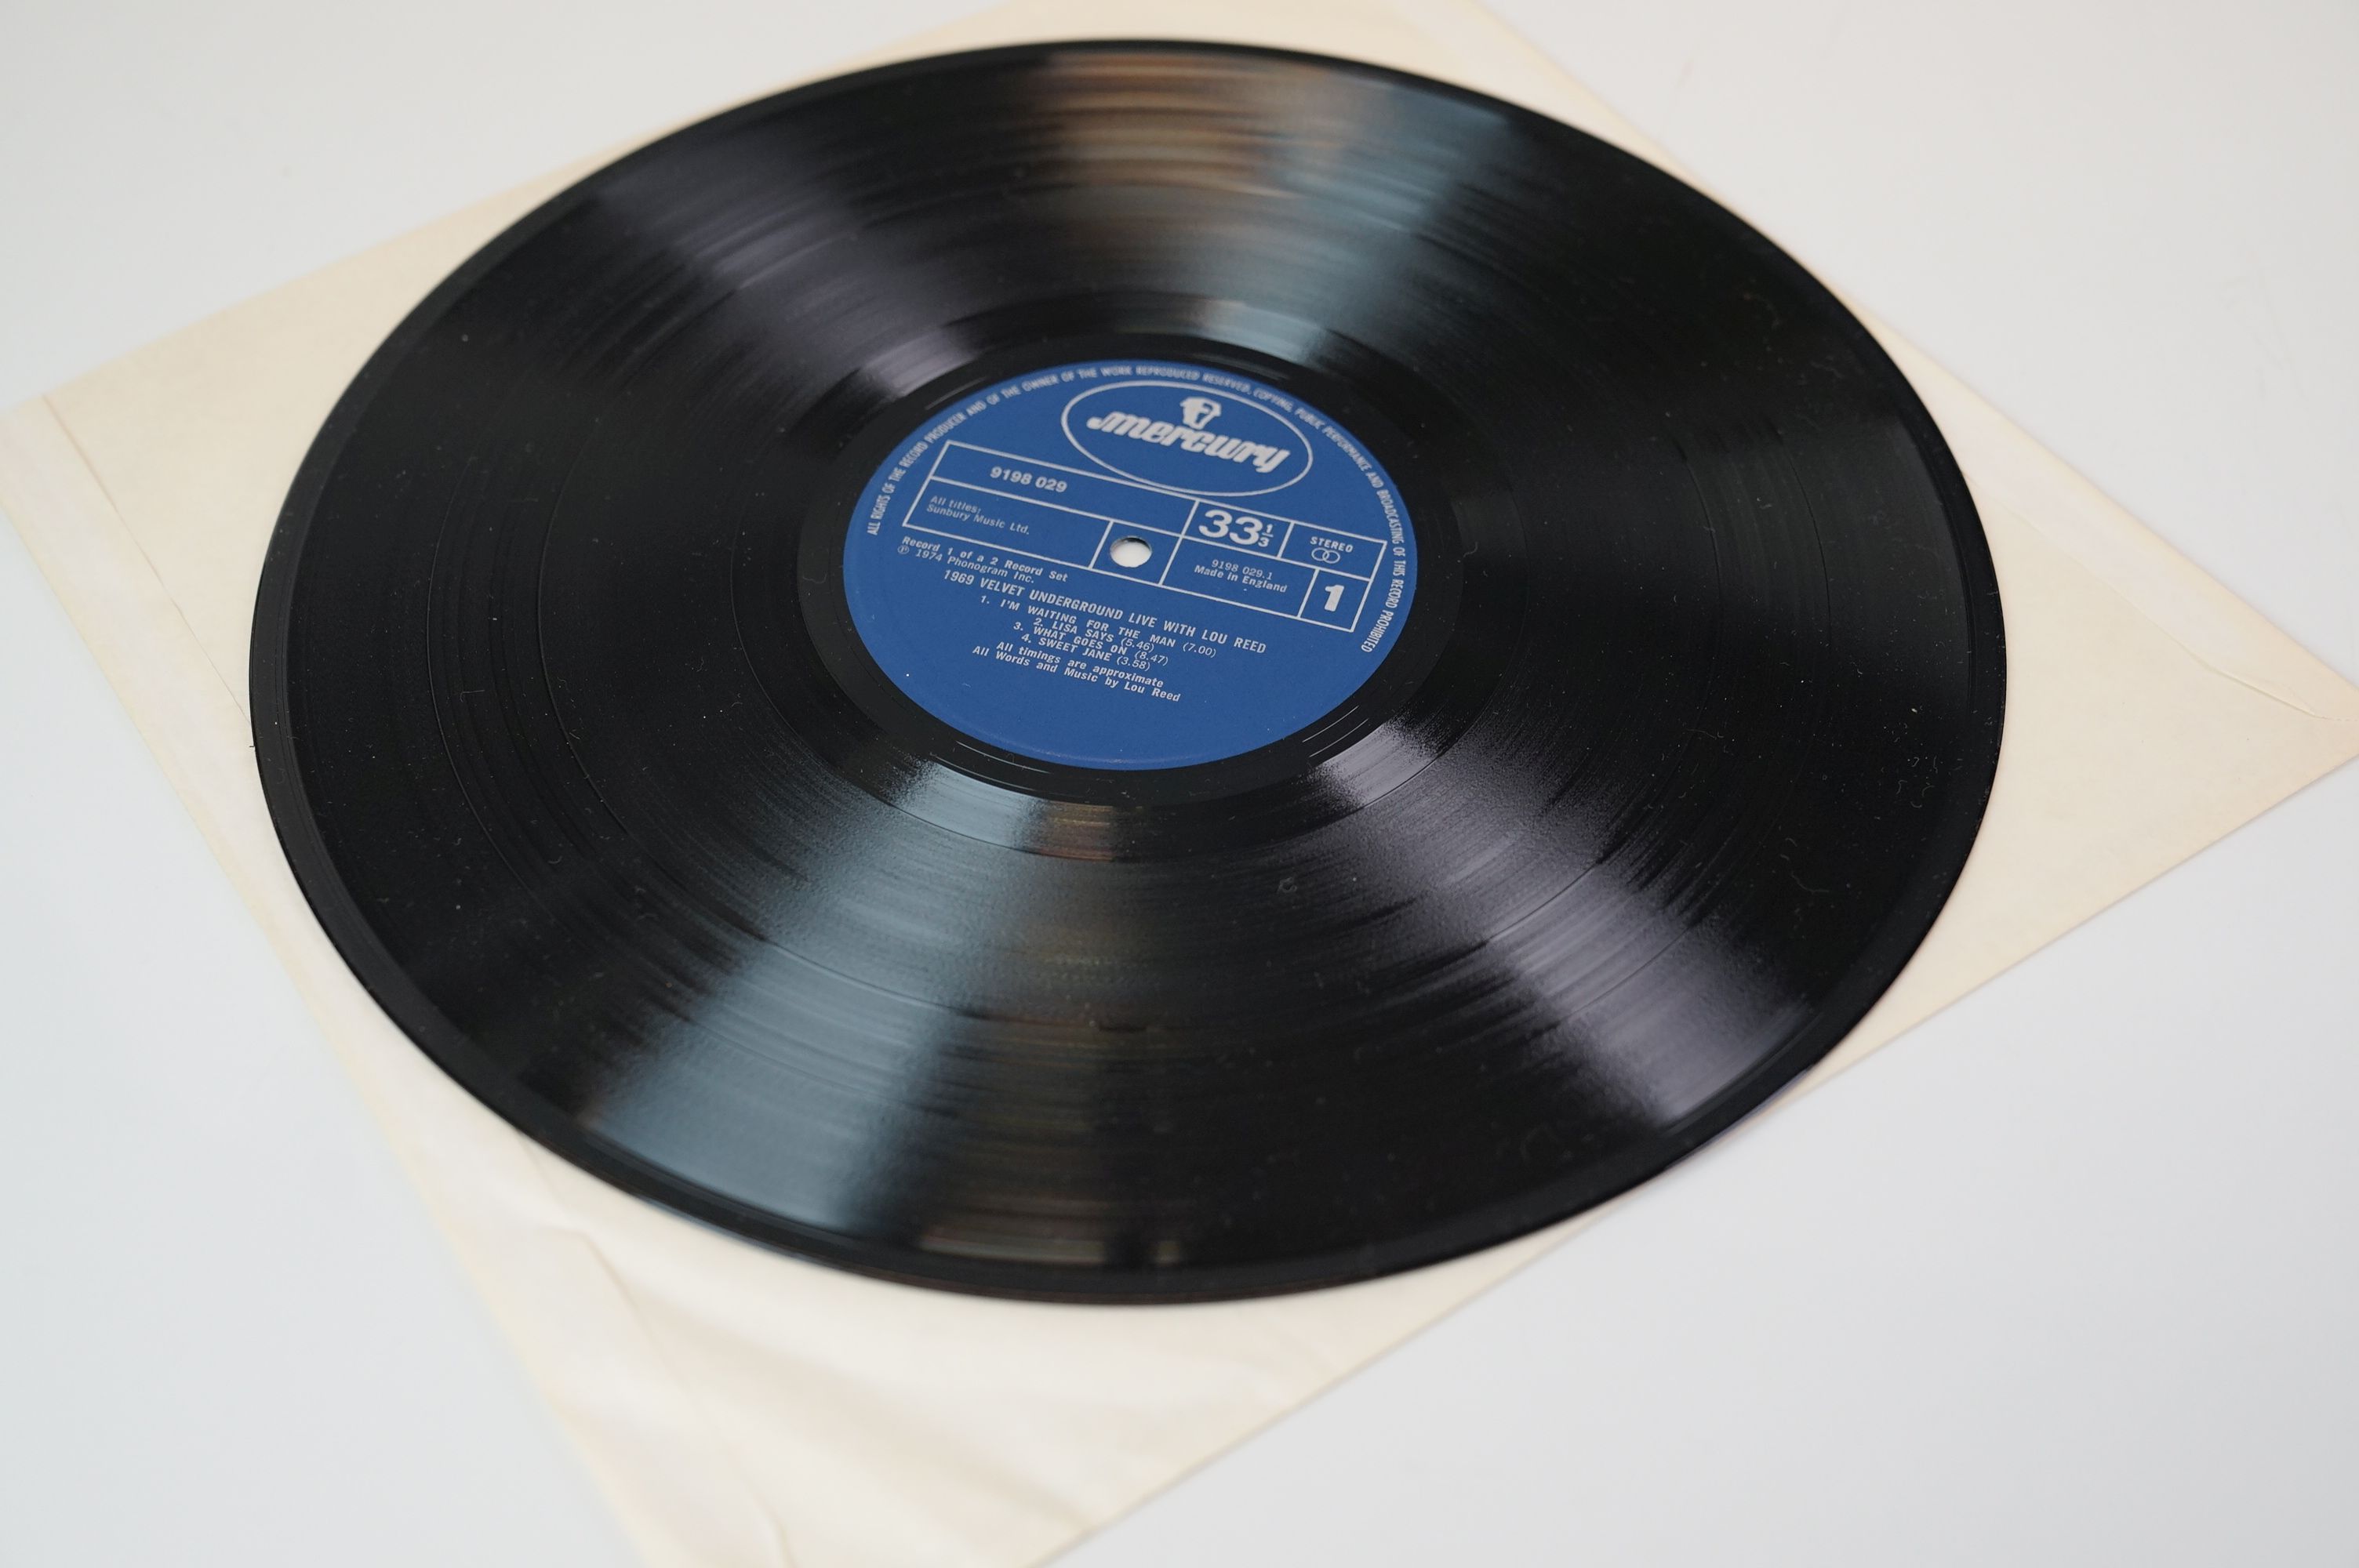 Vinyl - Four Velvet Underground LPs to include White Light/White Heat MGM 2353024, Loaded ( - Image 13 of 31